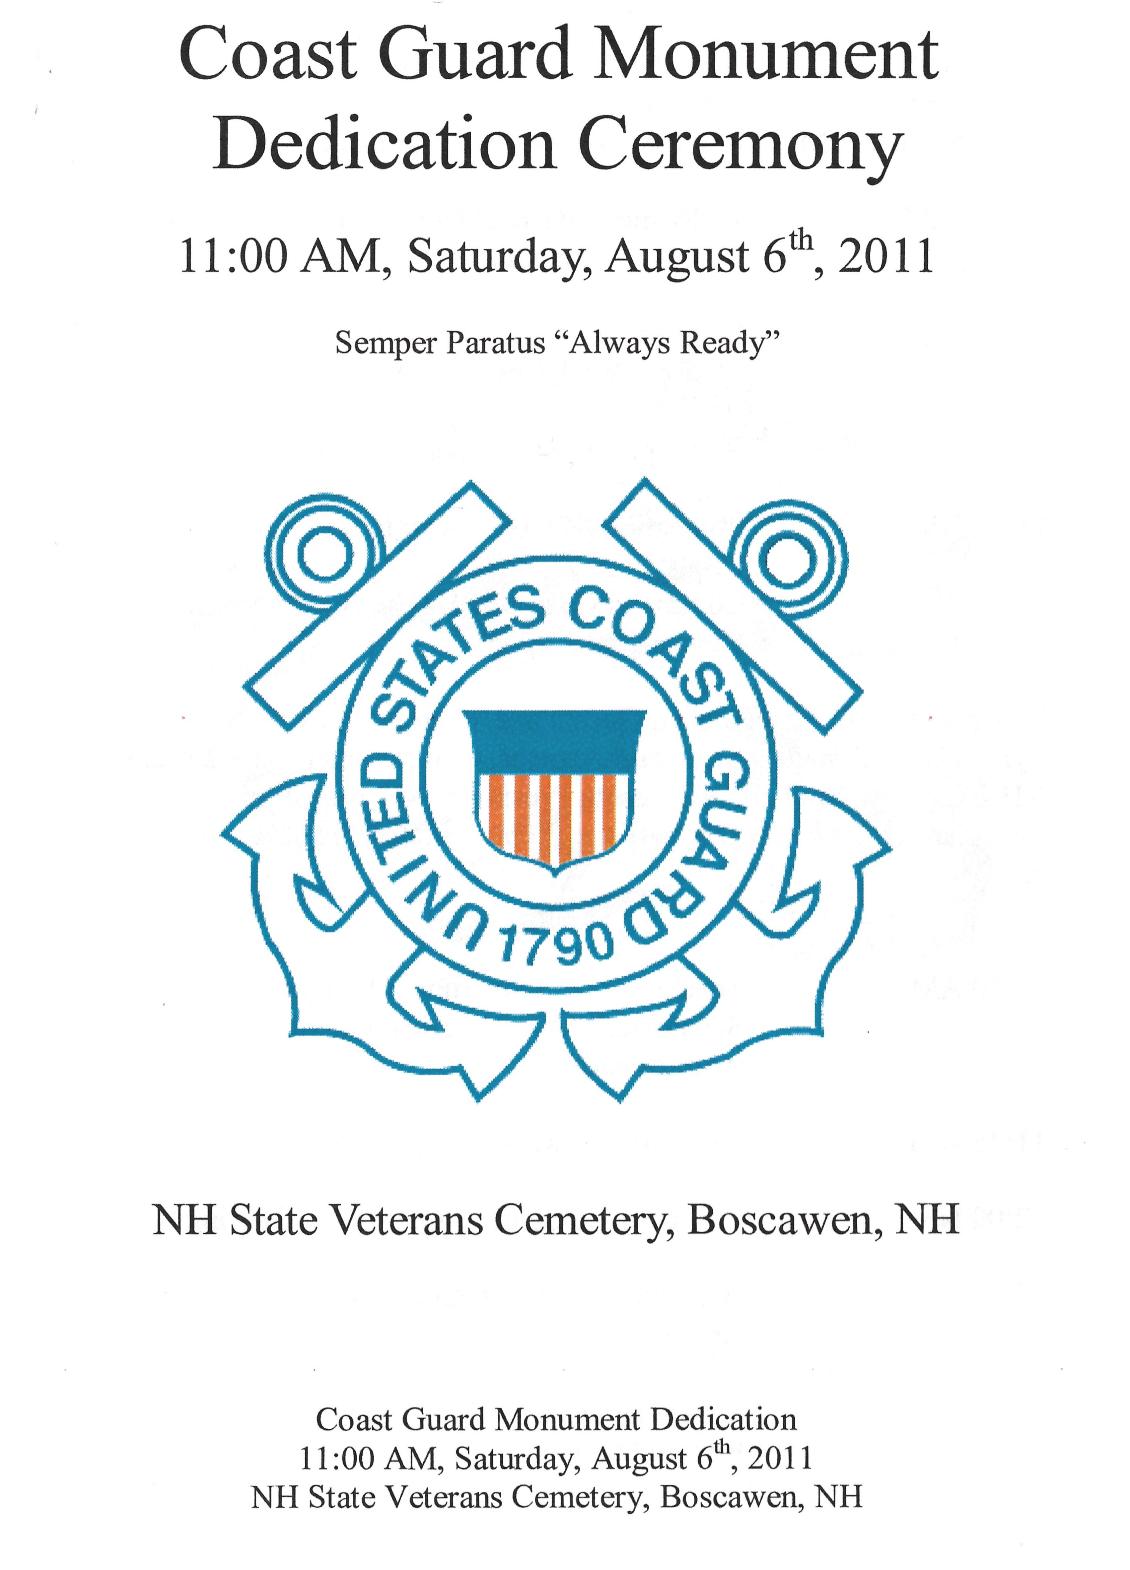 US Coast Guard Memorial dedication Nh State Veterans Cemetery August 6 2011